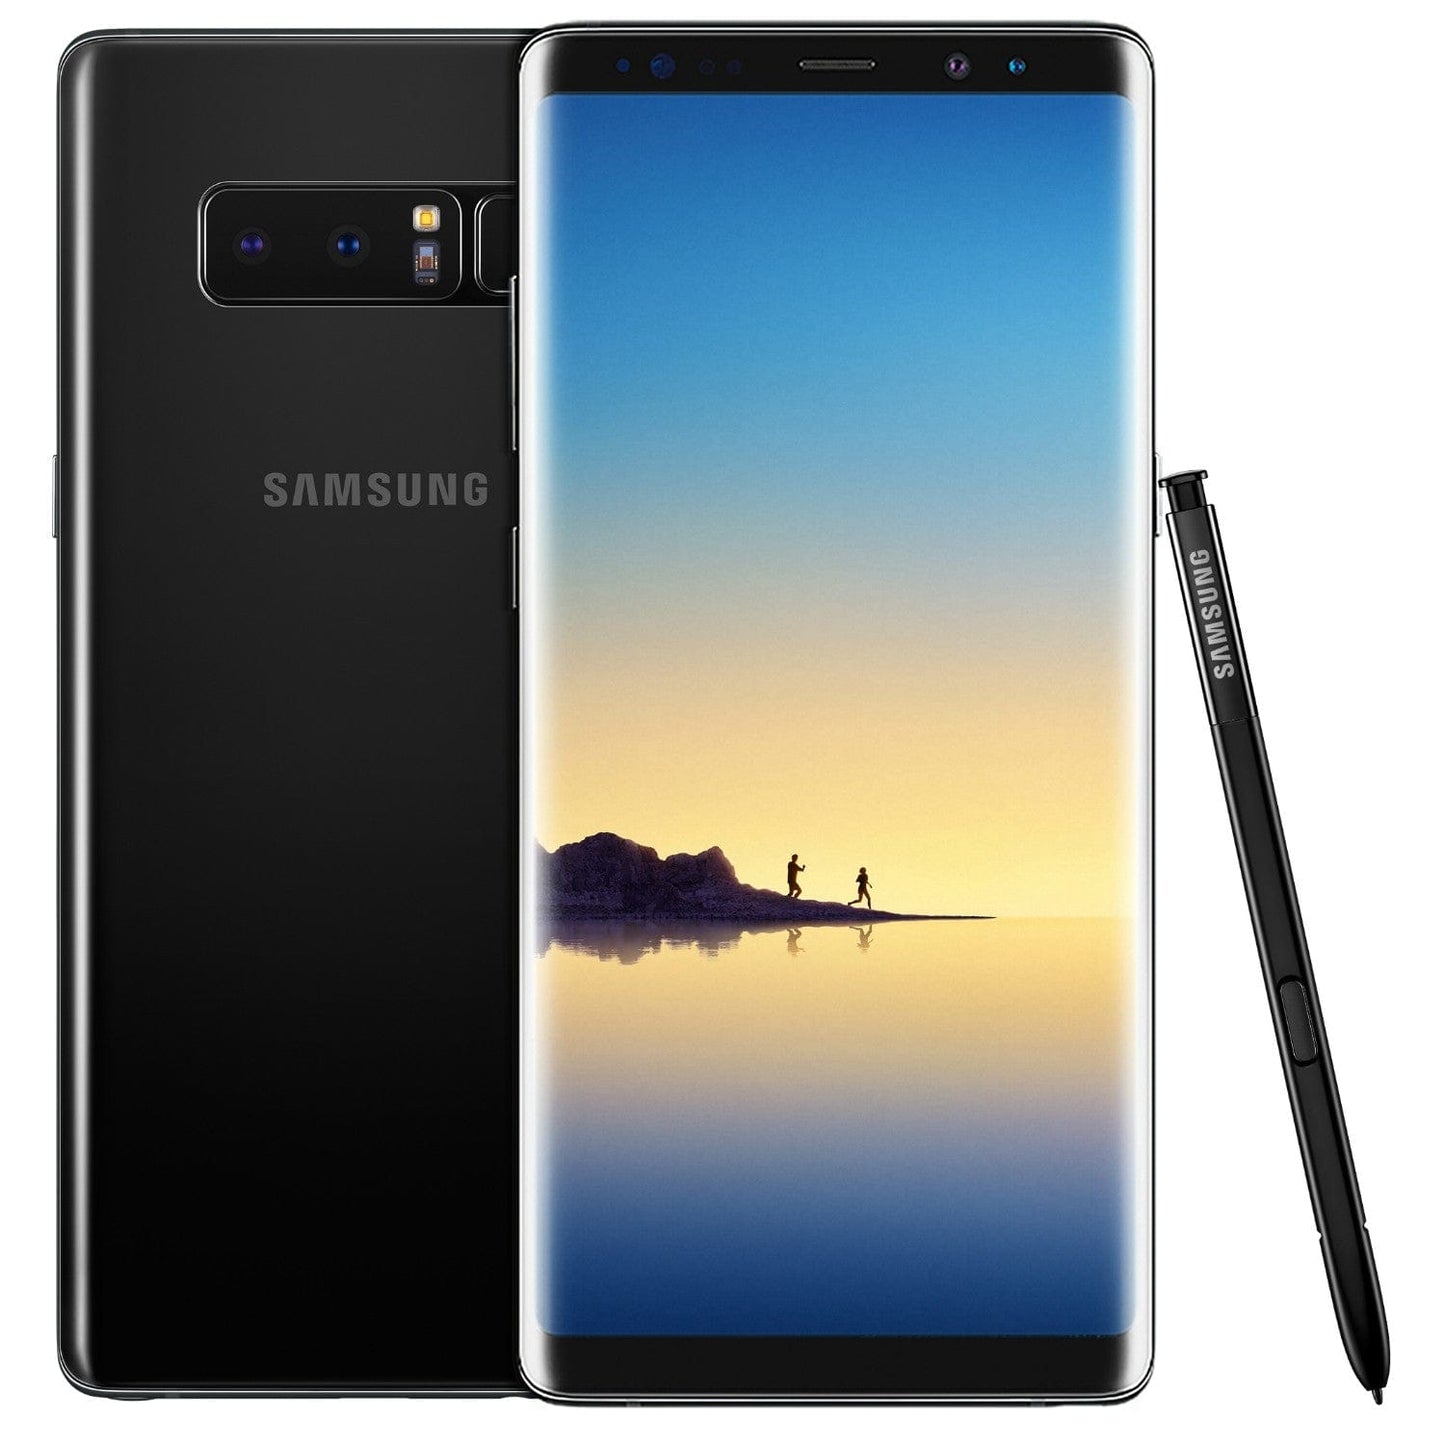 Samsung Galaxy Note8 - 64 GB - Midnight Black - Unlocked - GSM